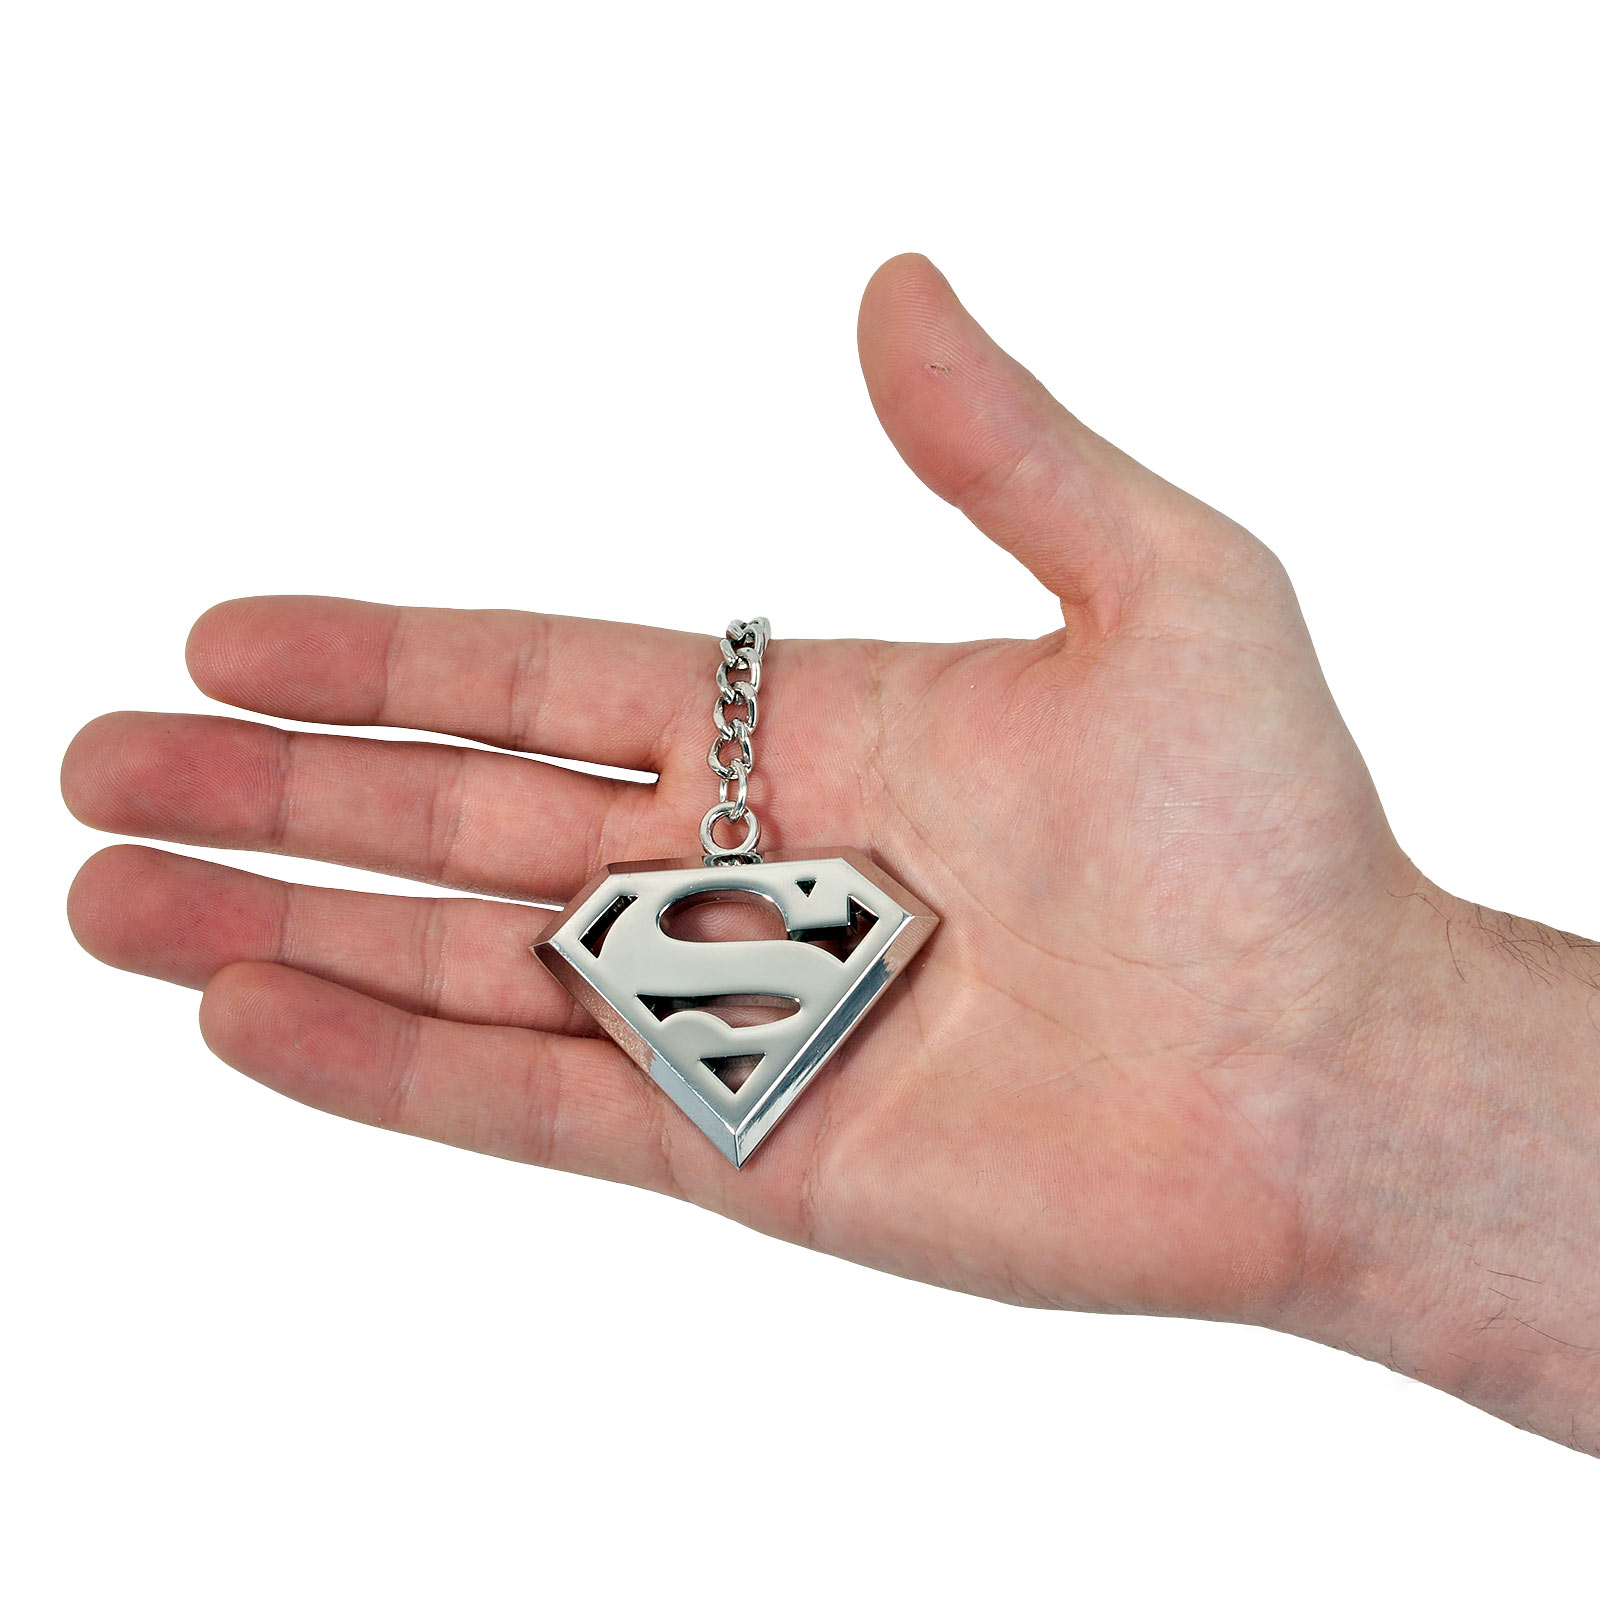 Superman - Logo Keychain